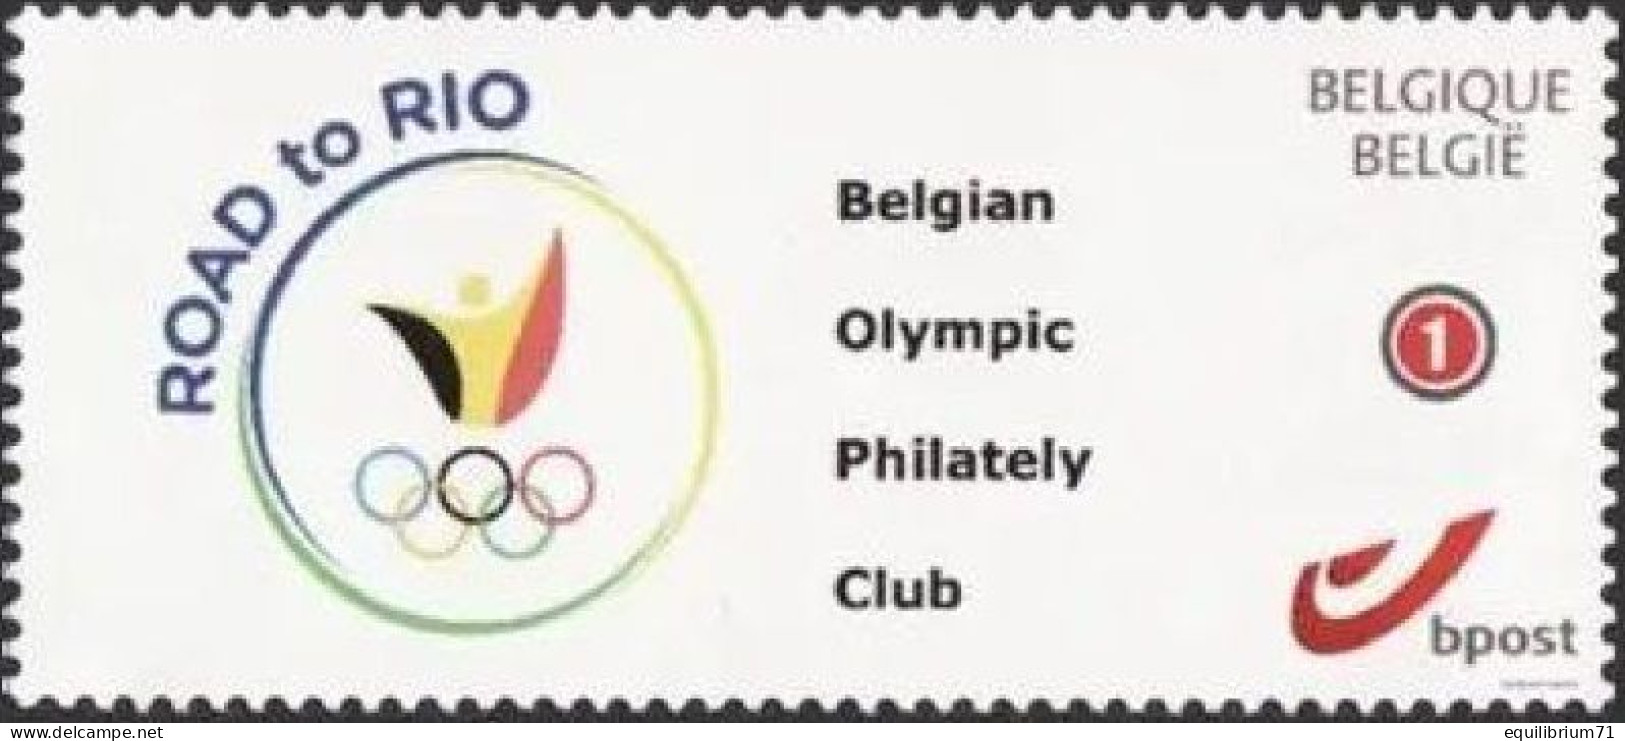 DUOSTAMP** / MYSTAMP** - Belgian Olympic Philately Club - BOPC - ROAD TO TOKYO - Sommer 2020: Tokio